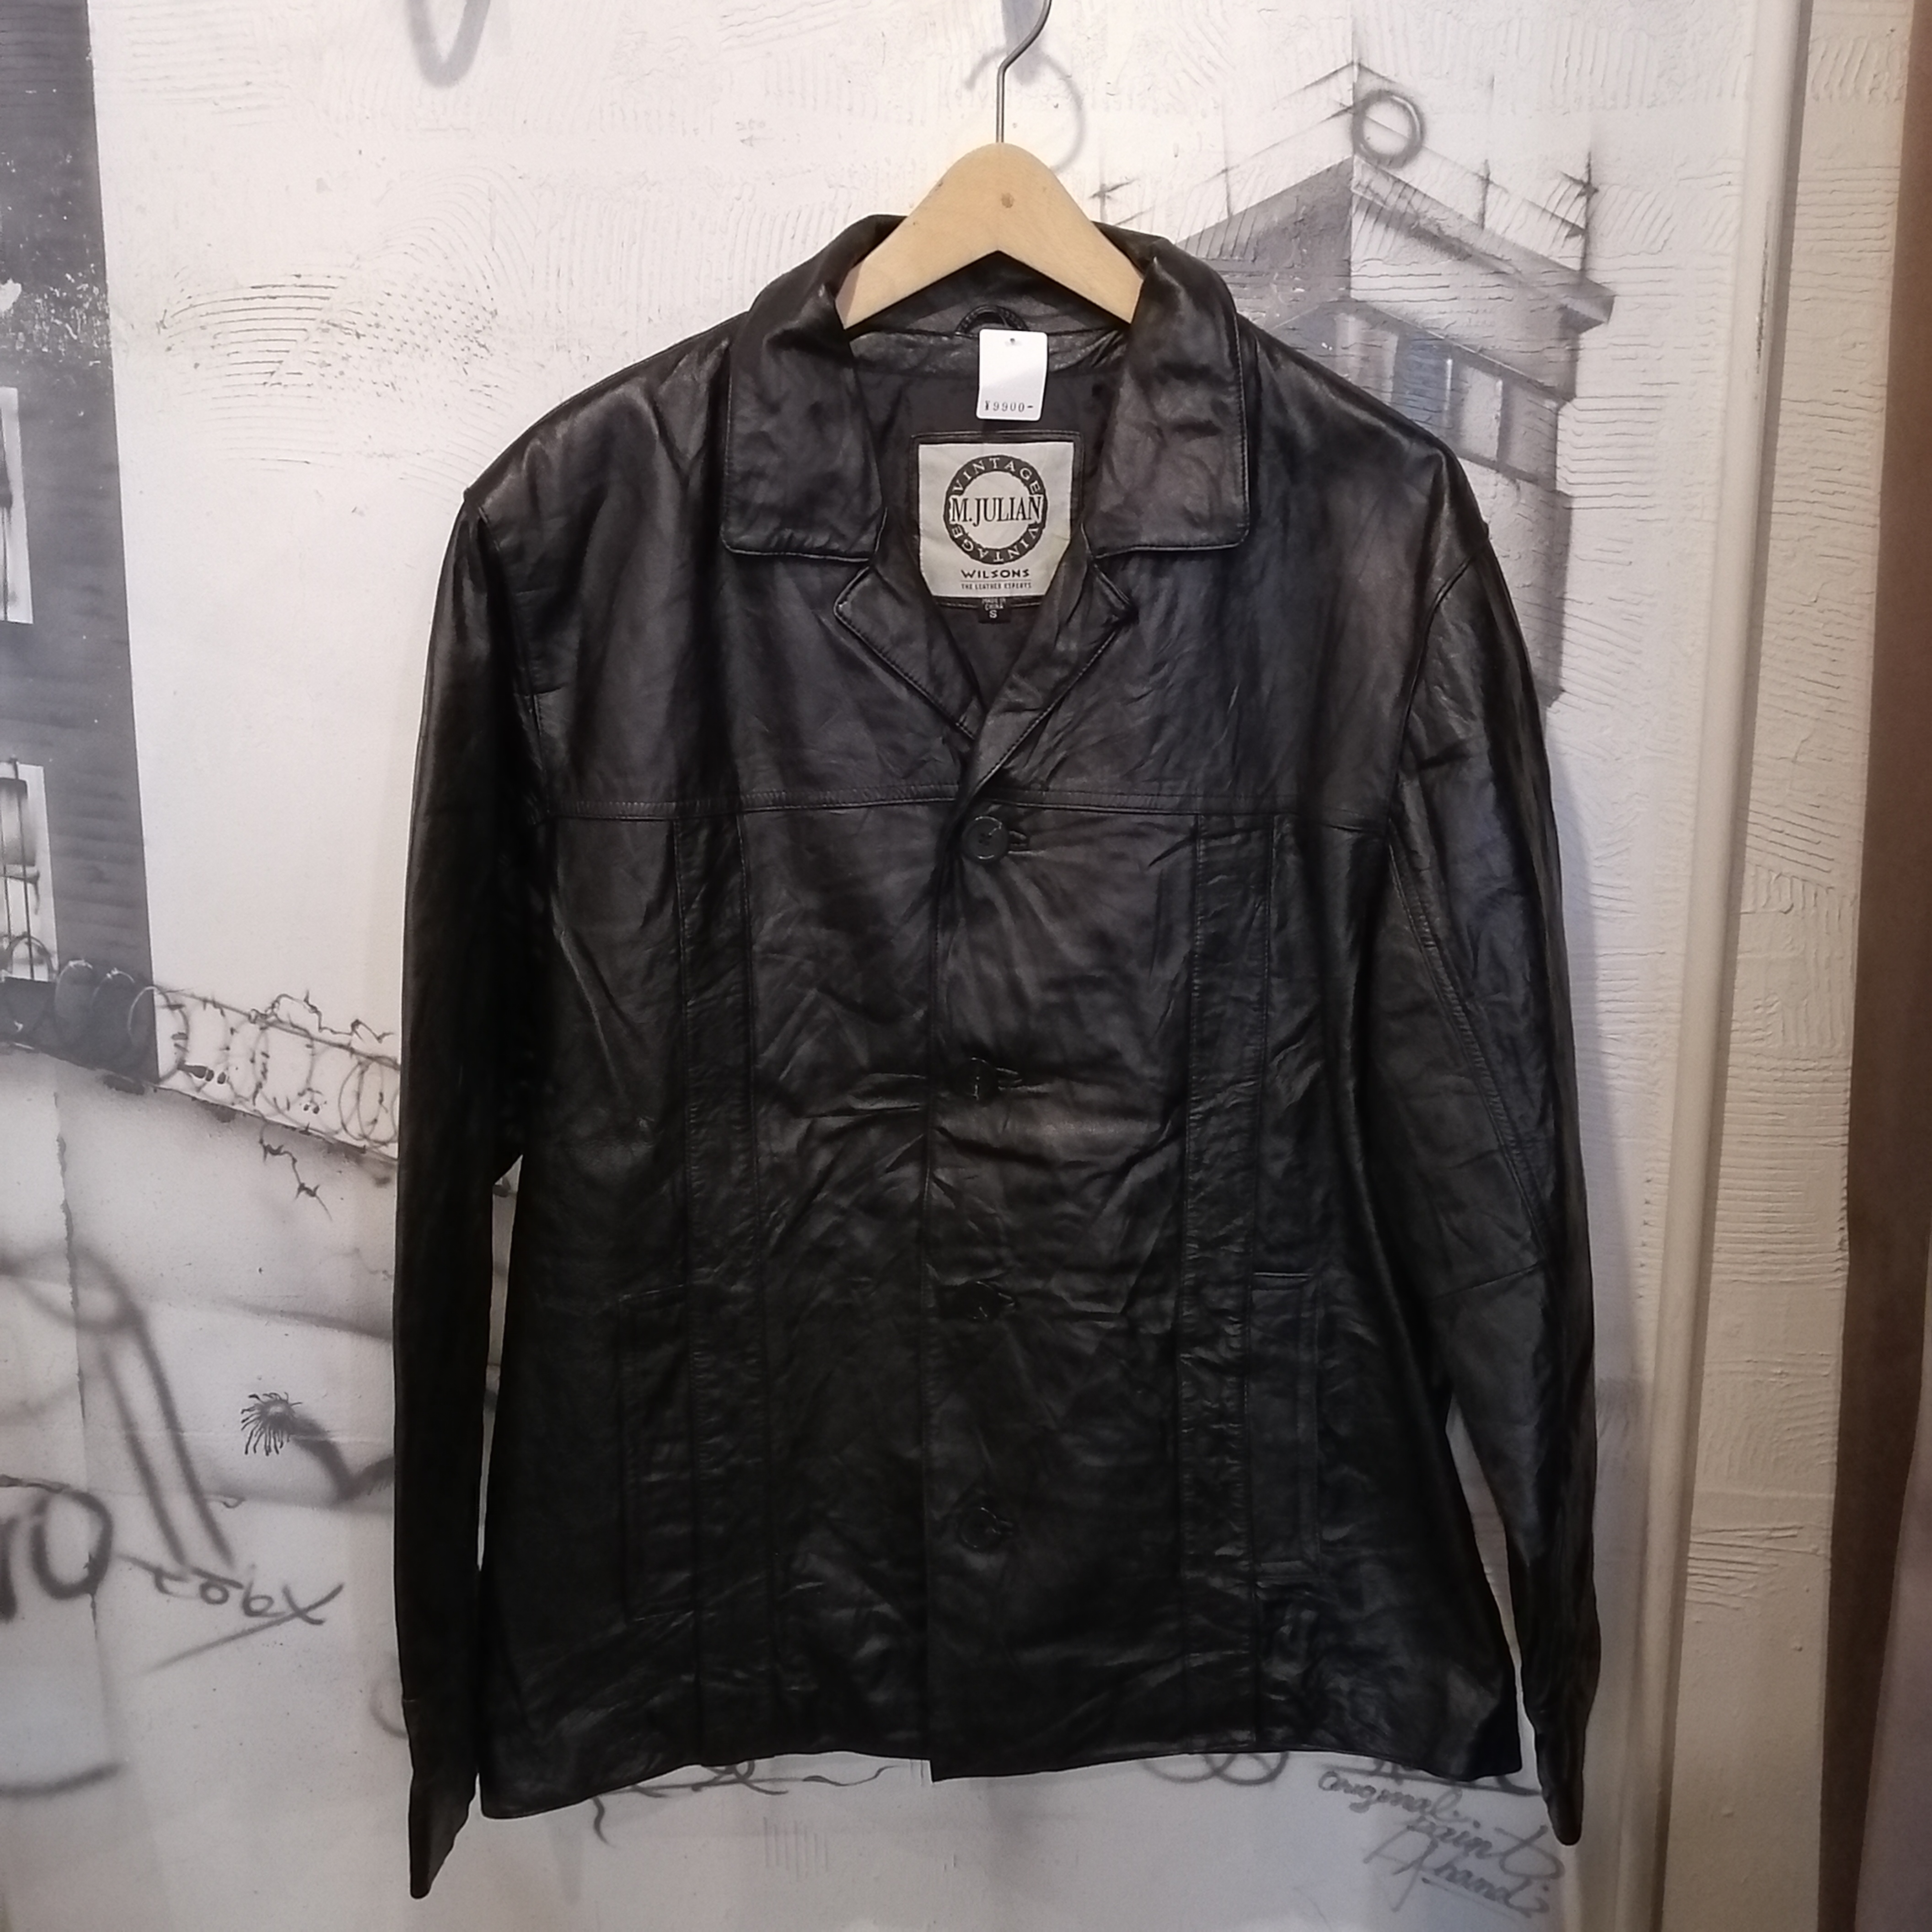 WILSON leather jacket